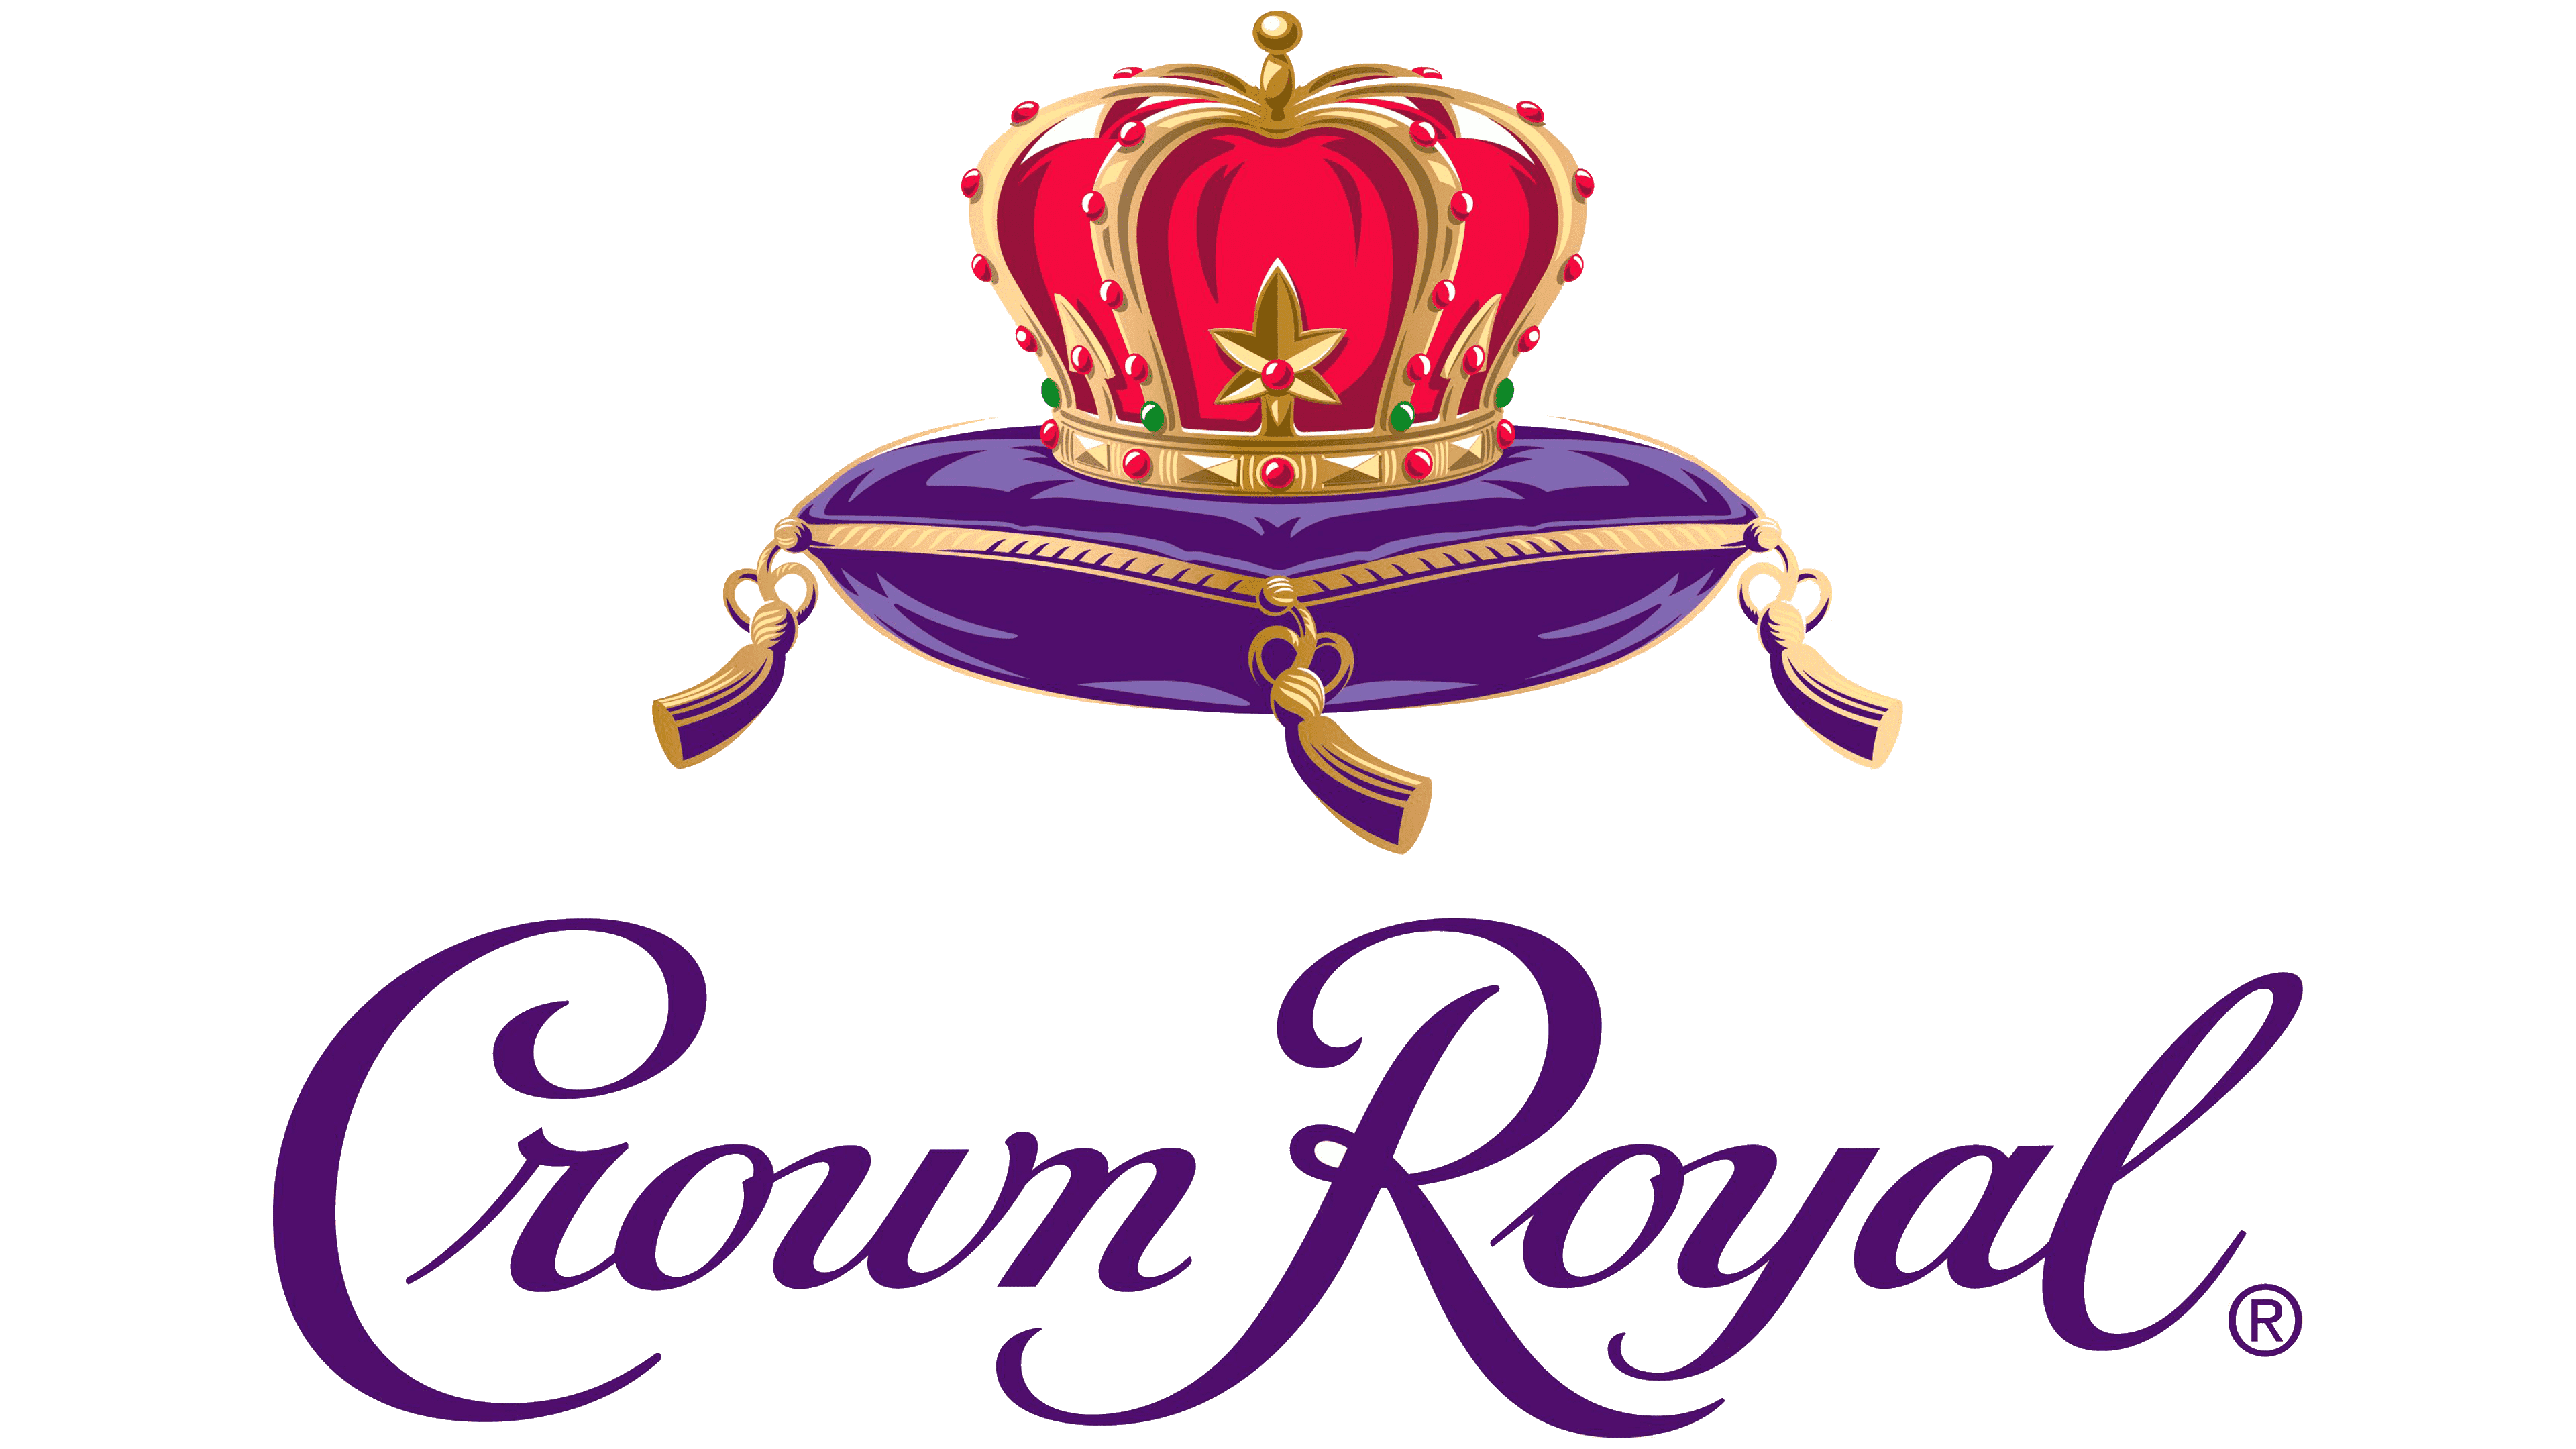 Crown Royal Logo Purple-Black Baseball Jersey Shirt - Reallgraphics